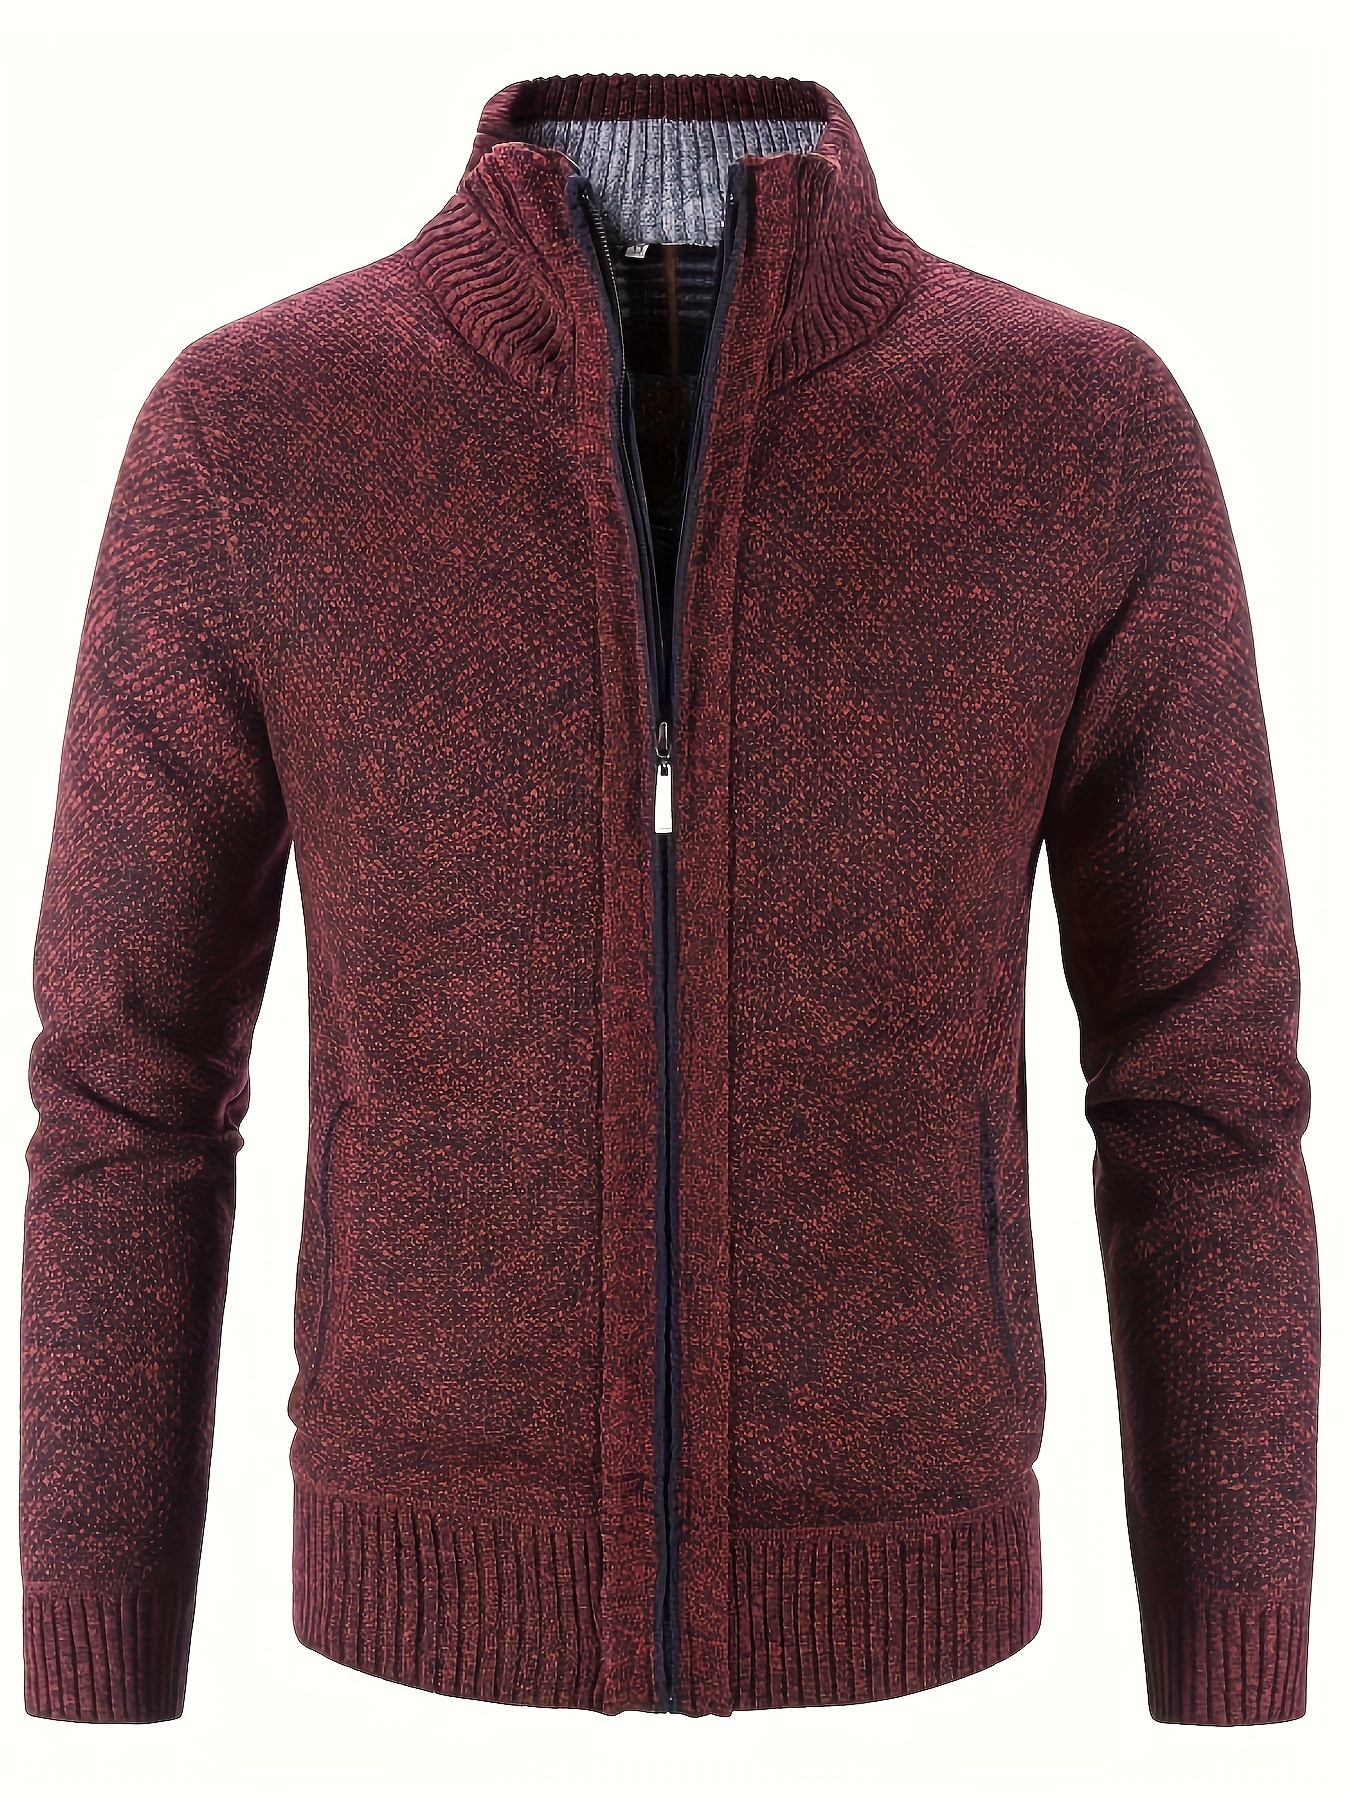 Cárdigan de lana para hombre con cremallera, suéter de punto de lana gruesa  casual de manga larga con bolsillos